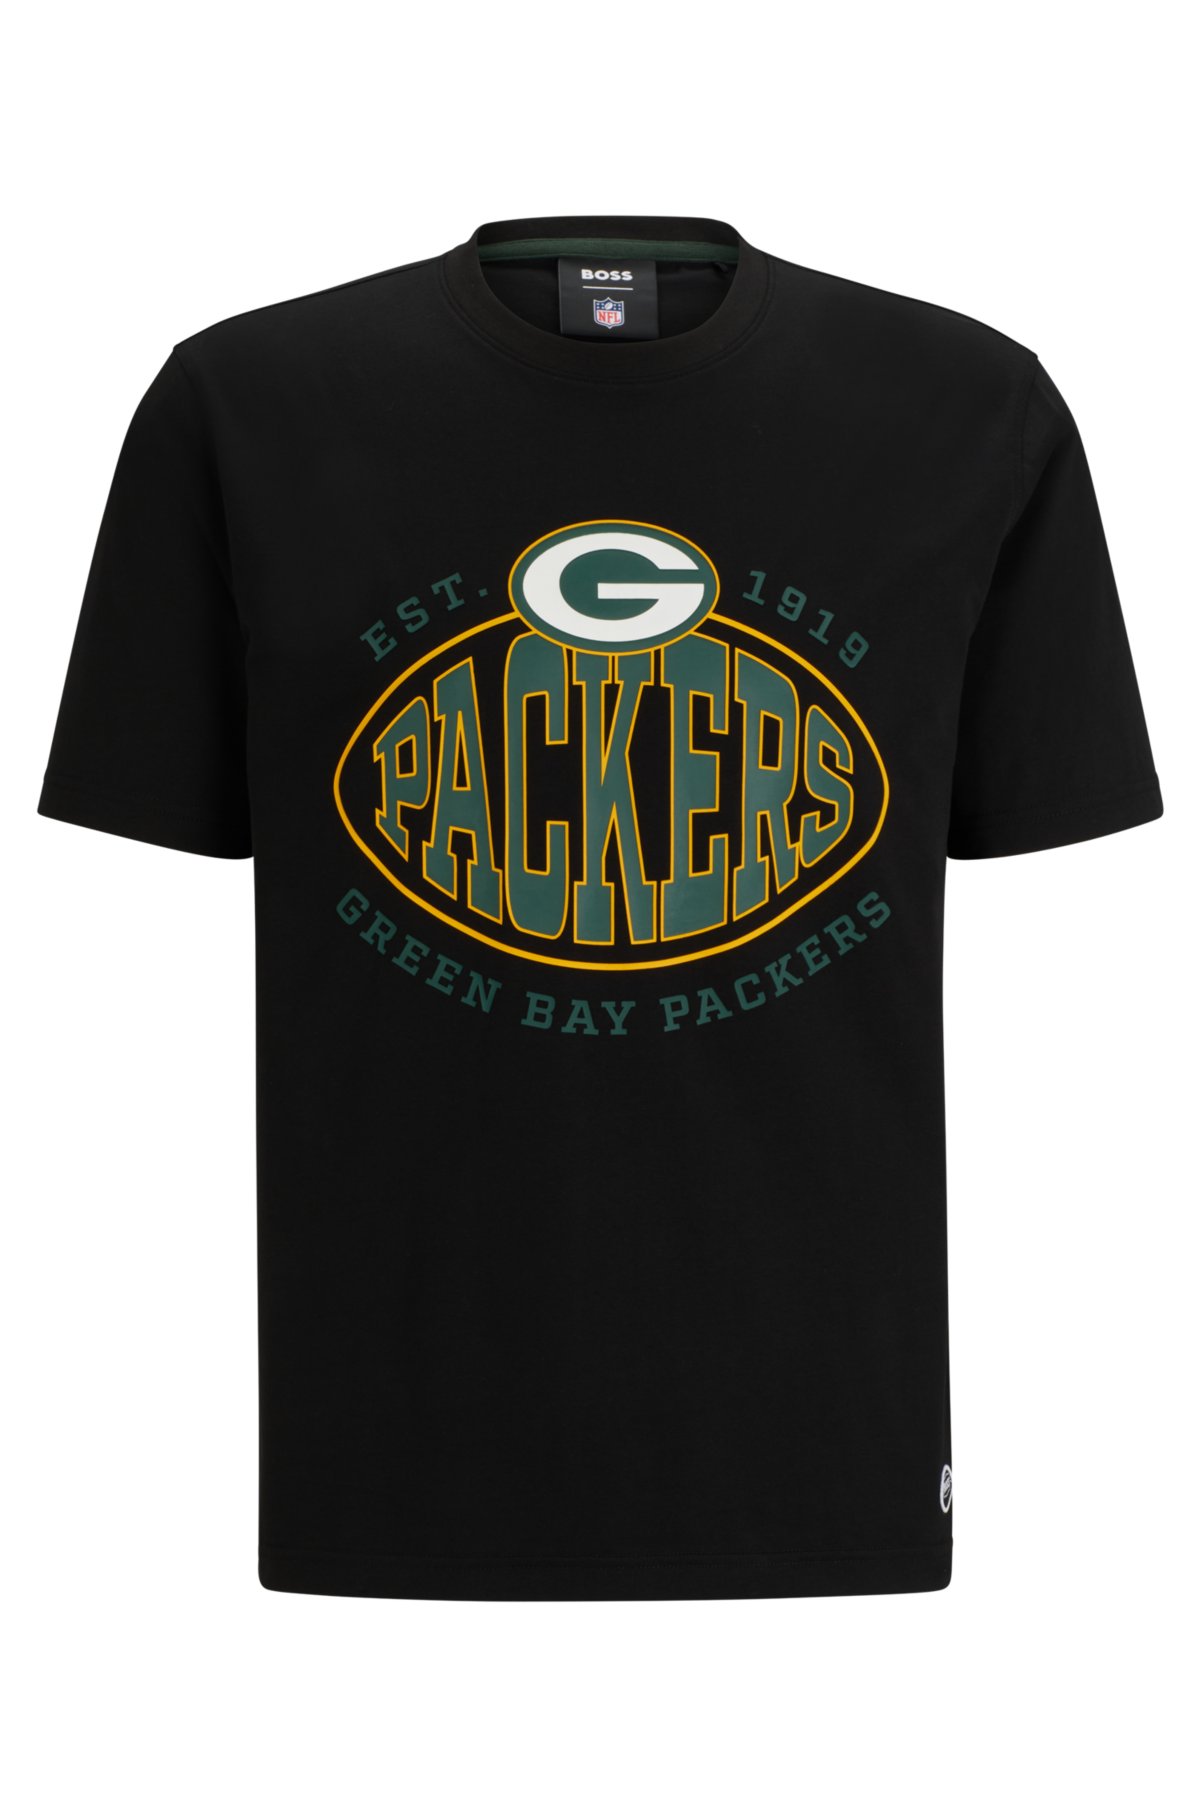 Men's Boss x NFL Black Green Bay Packers Trap T-Shirt Size: Small